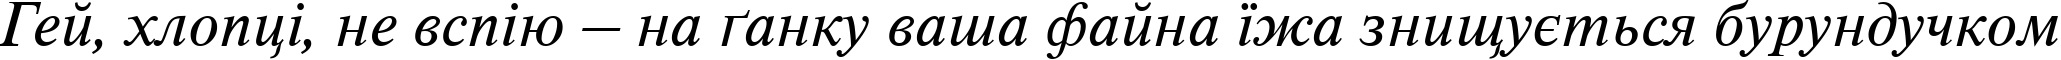 Пример написания шрифтом TimelessTCYLig Italic текста на украинском